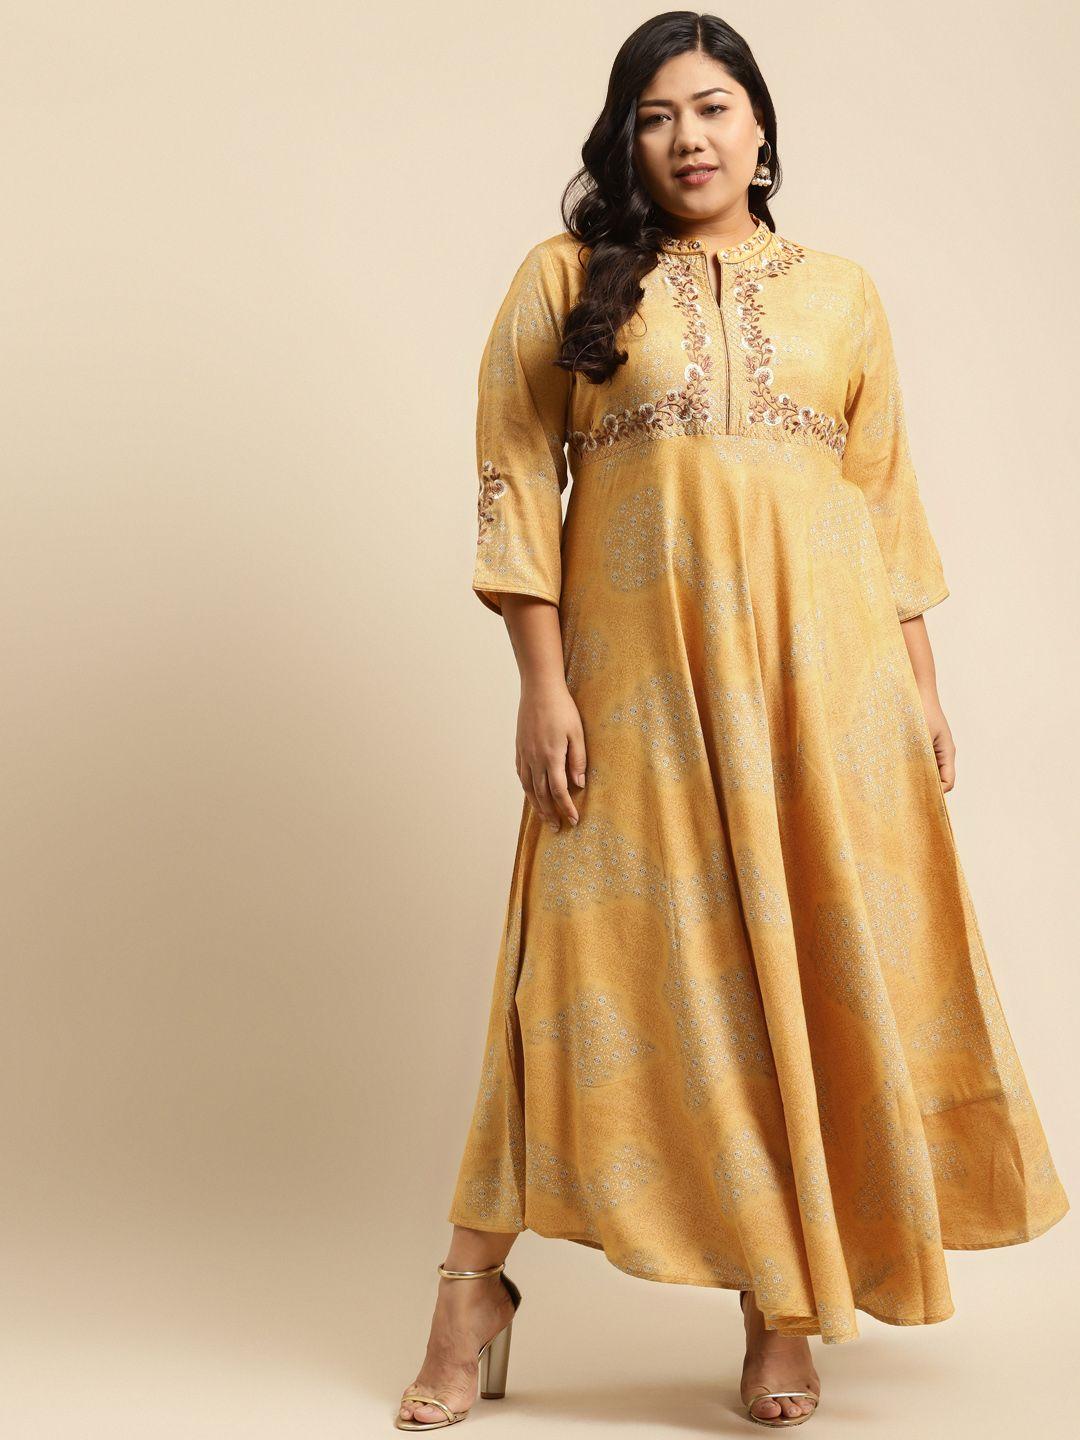 rangmayee yellow & beige floral embroidered liva ethnic maxi dress